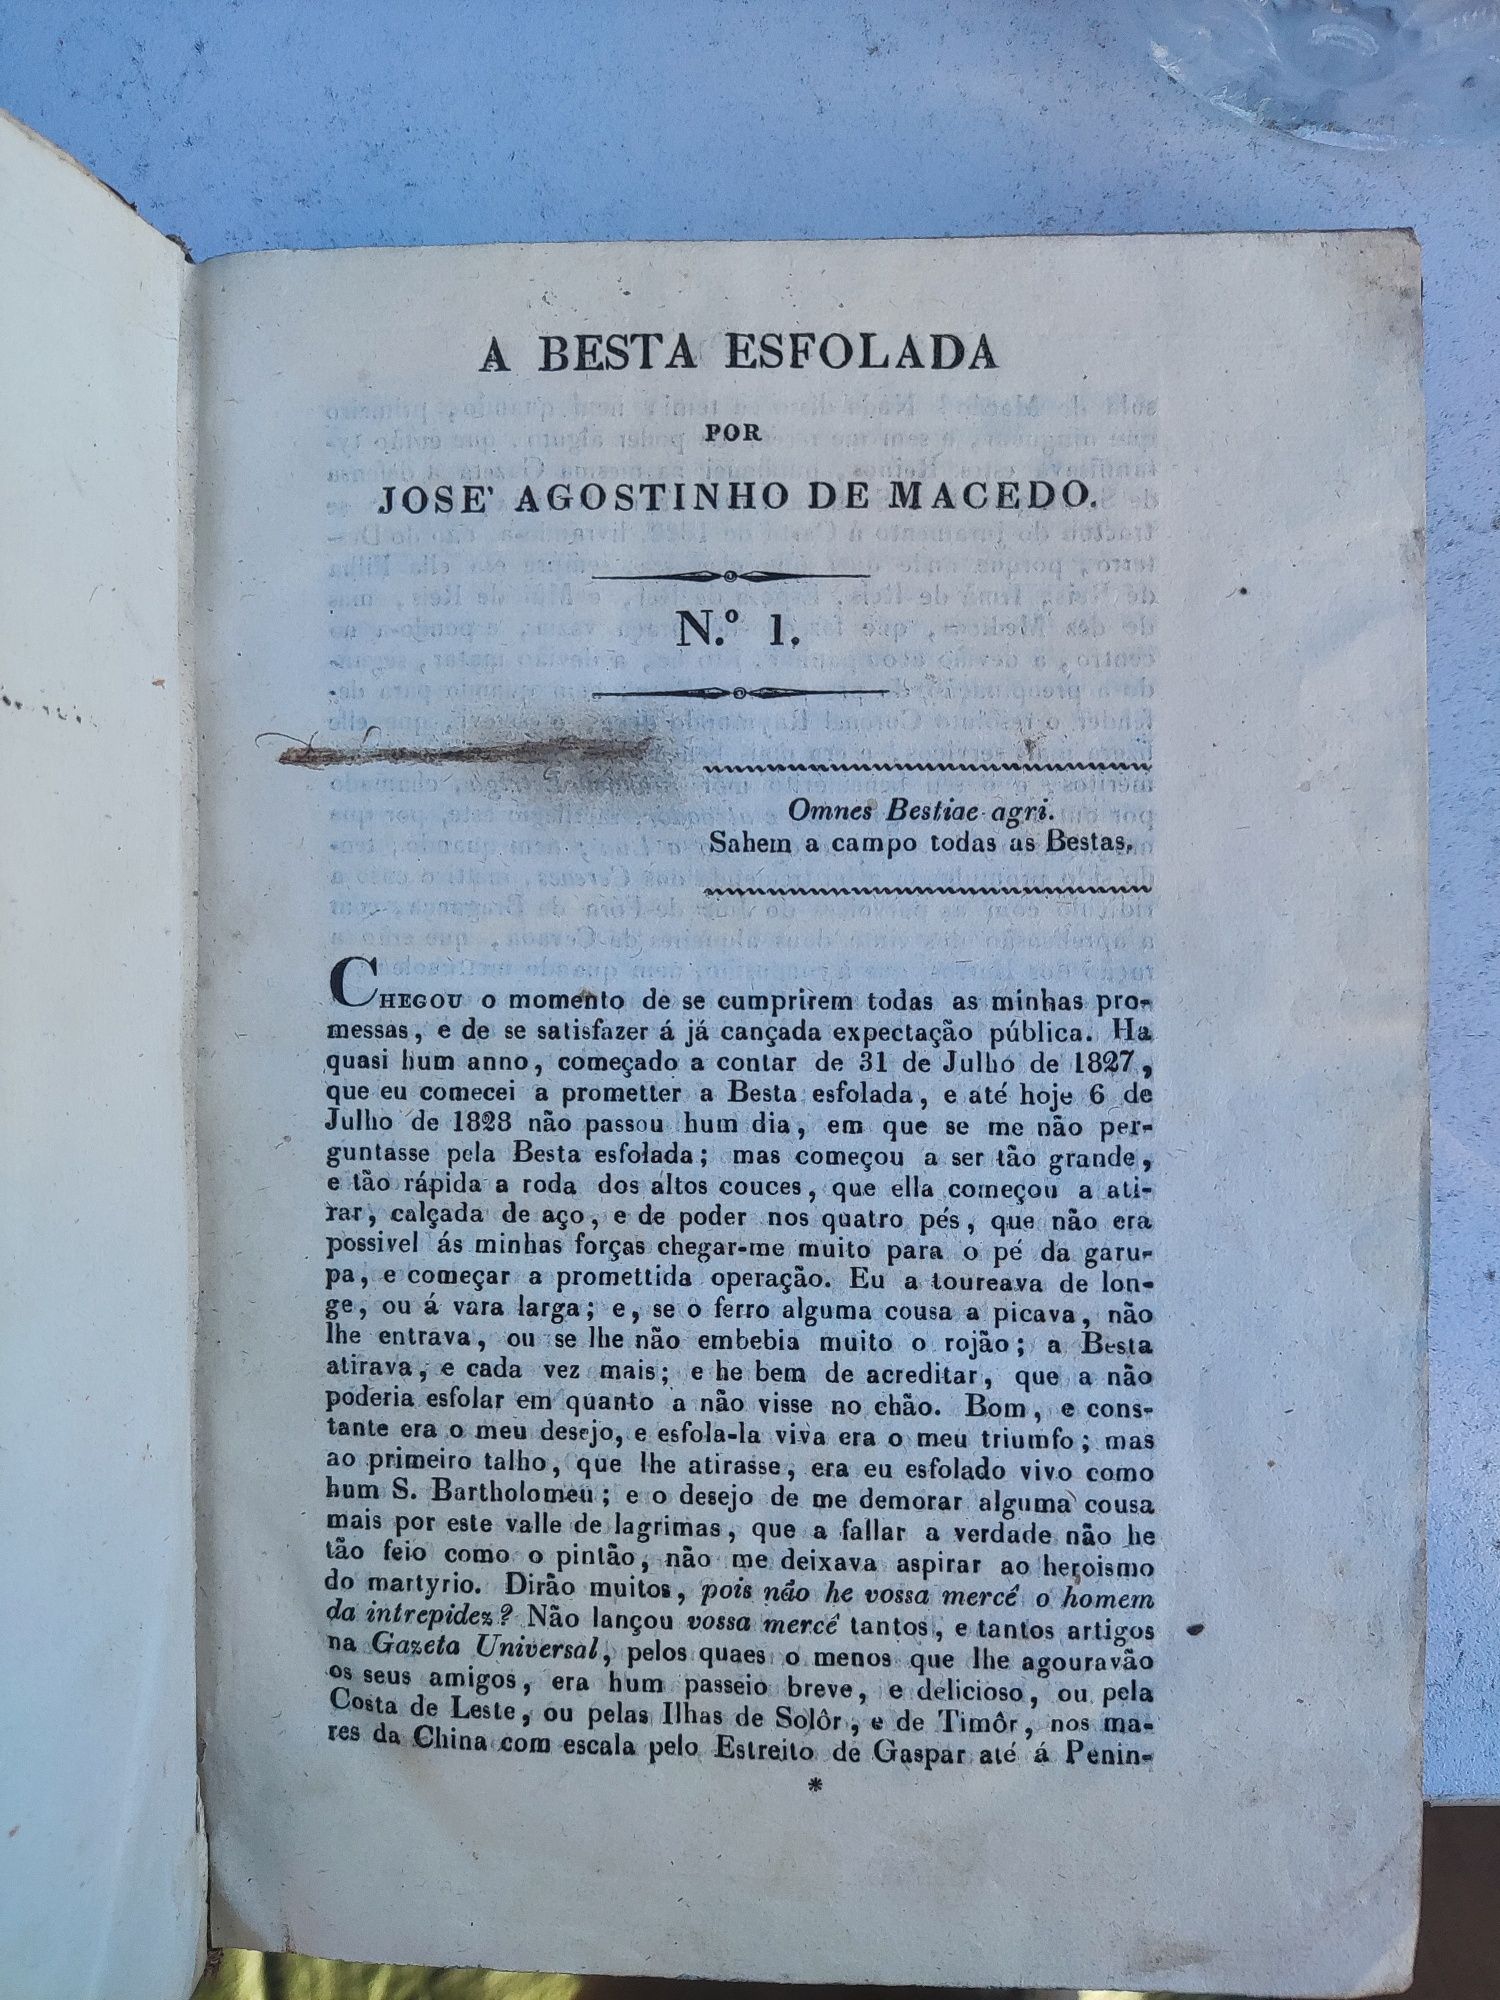 A besta esfolada - Jose Agostinho Macedo 1829